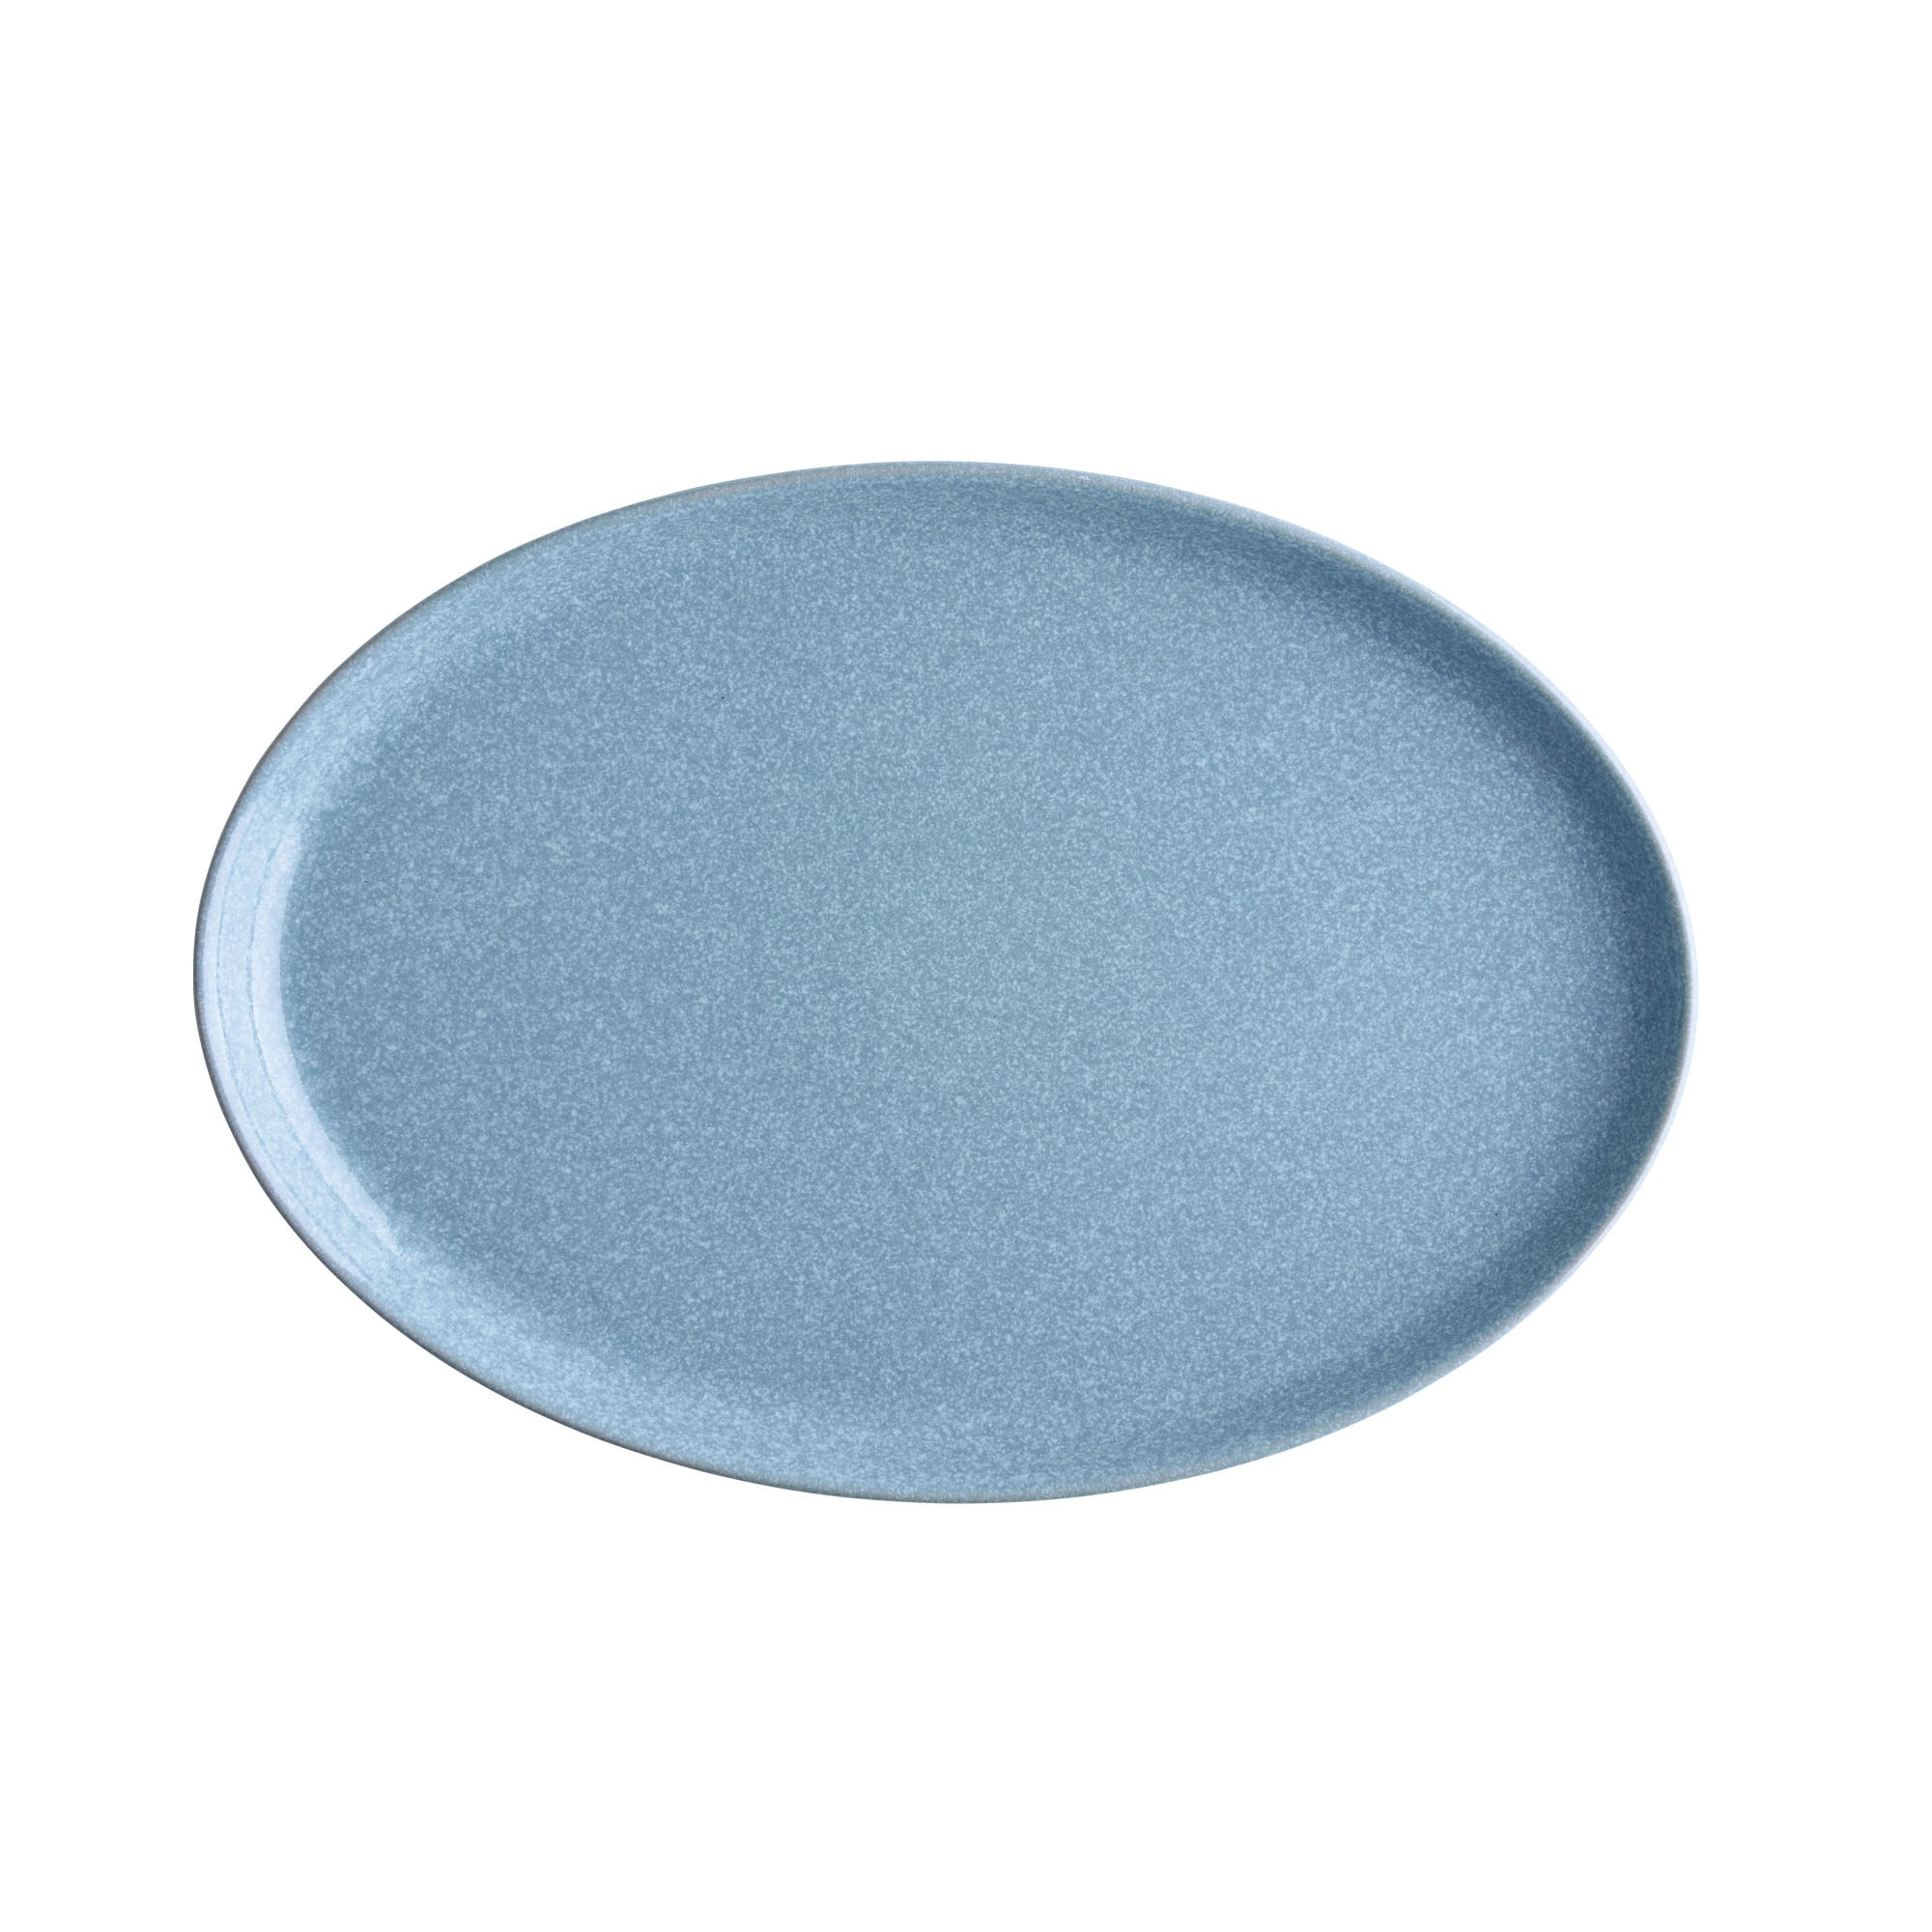 Elements Blue Medium Oval Tray Seconds